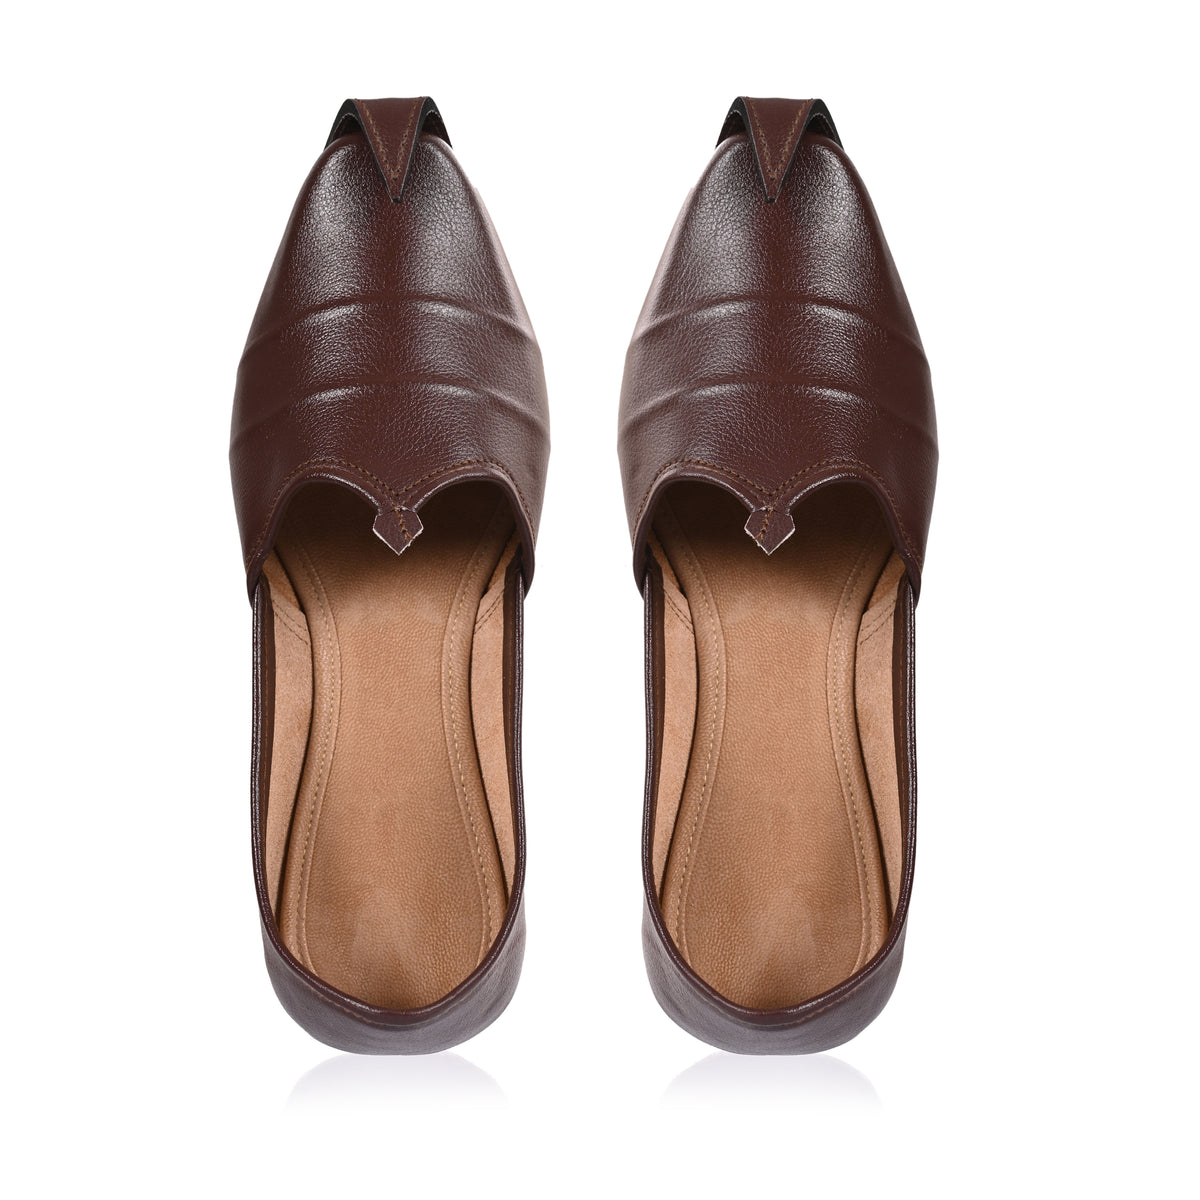 Brown Leather Mojari / Slip on with self Stripes for Men